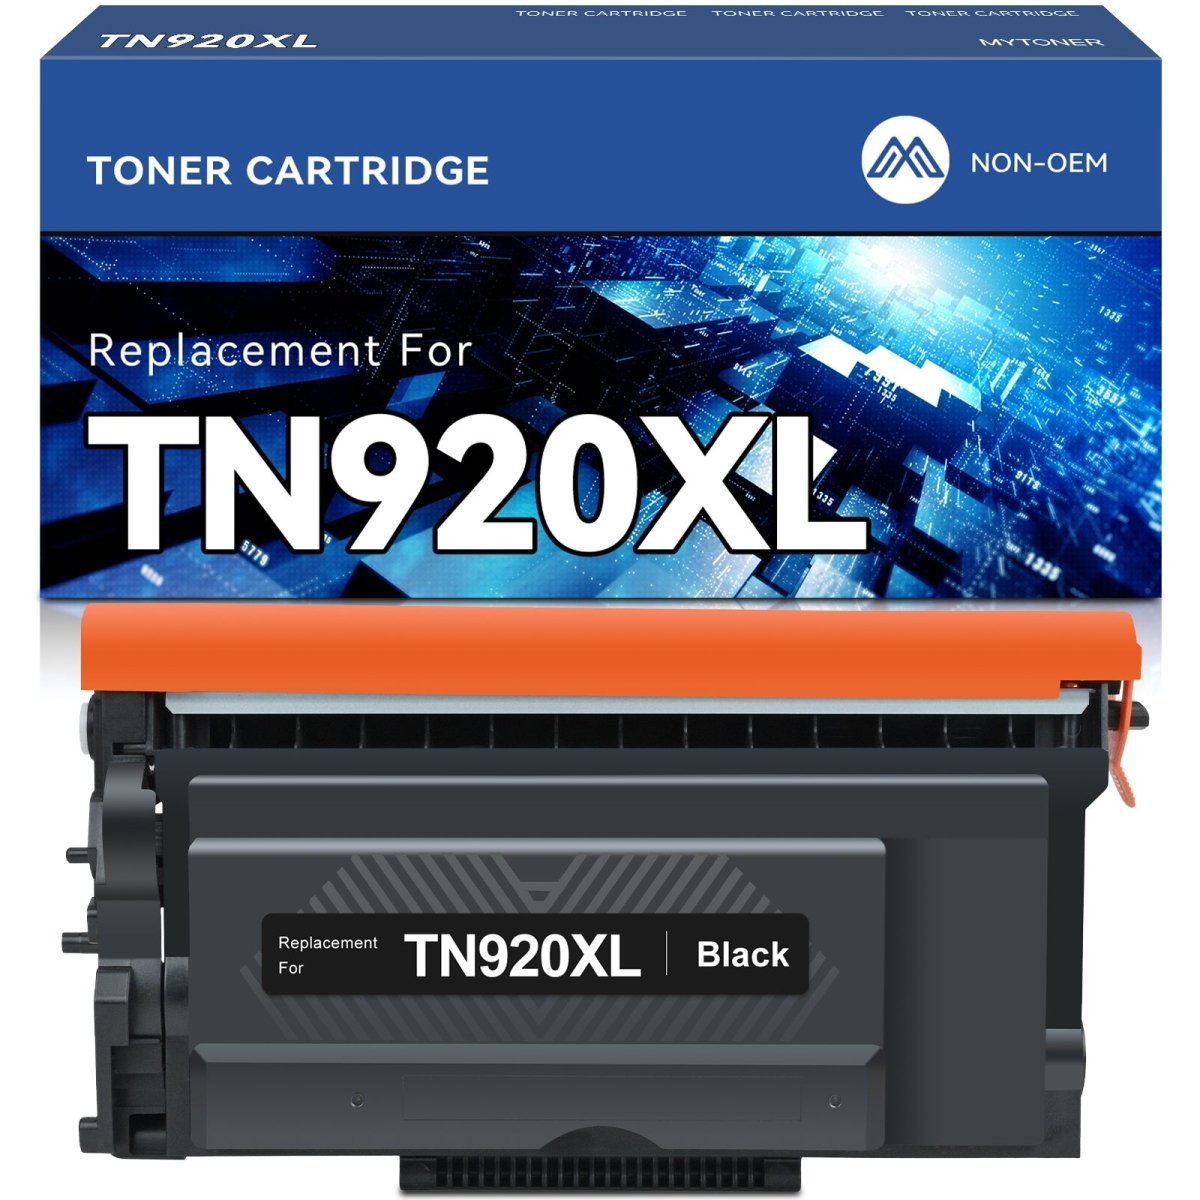 Brother-tn920xl-toner-cartridge-high-yield-black-1-pack